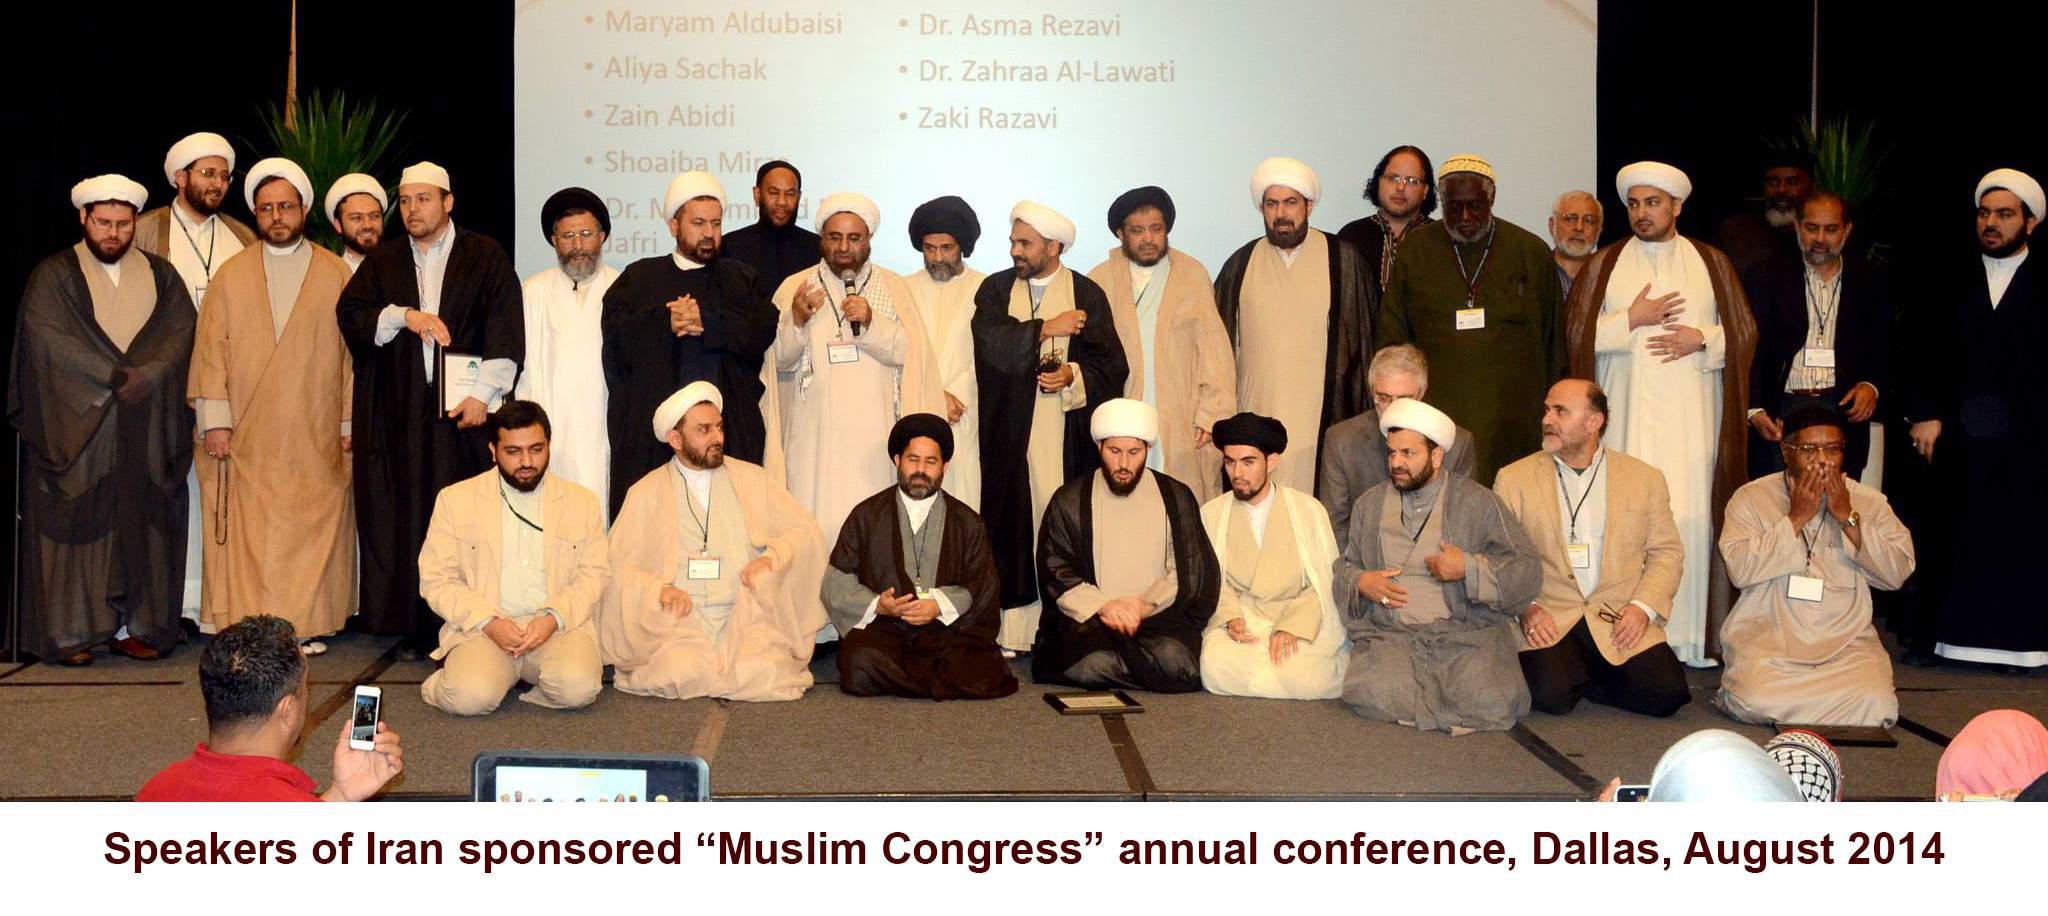 ifmat - Speakers of Iran sponsored muslimg congress